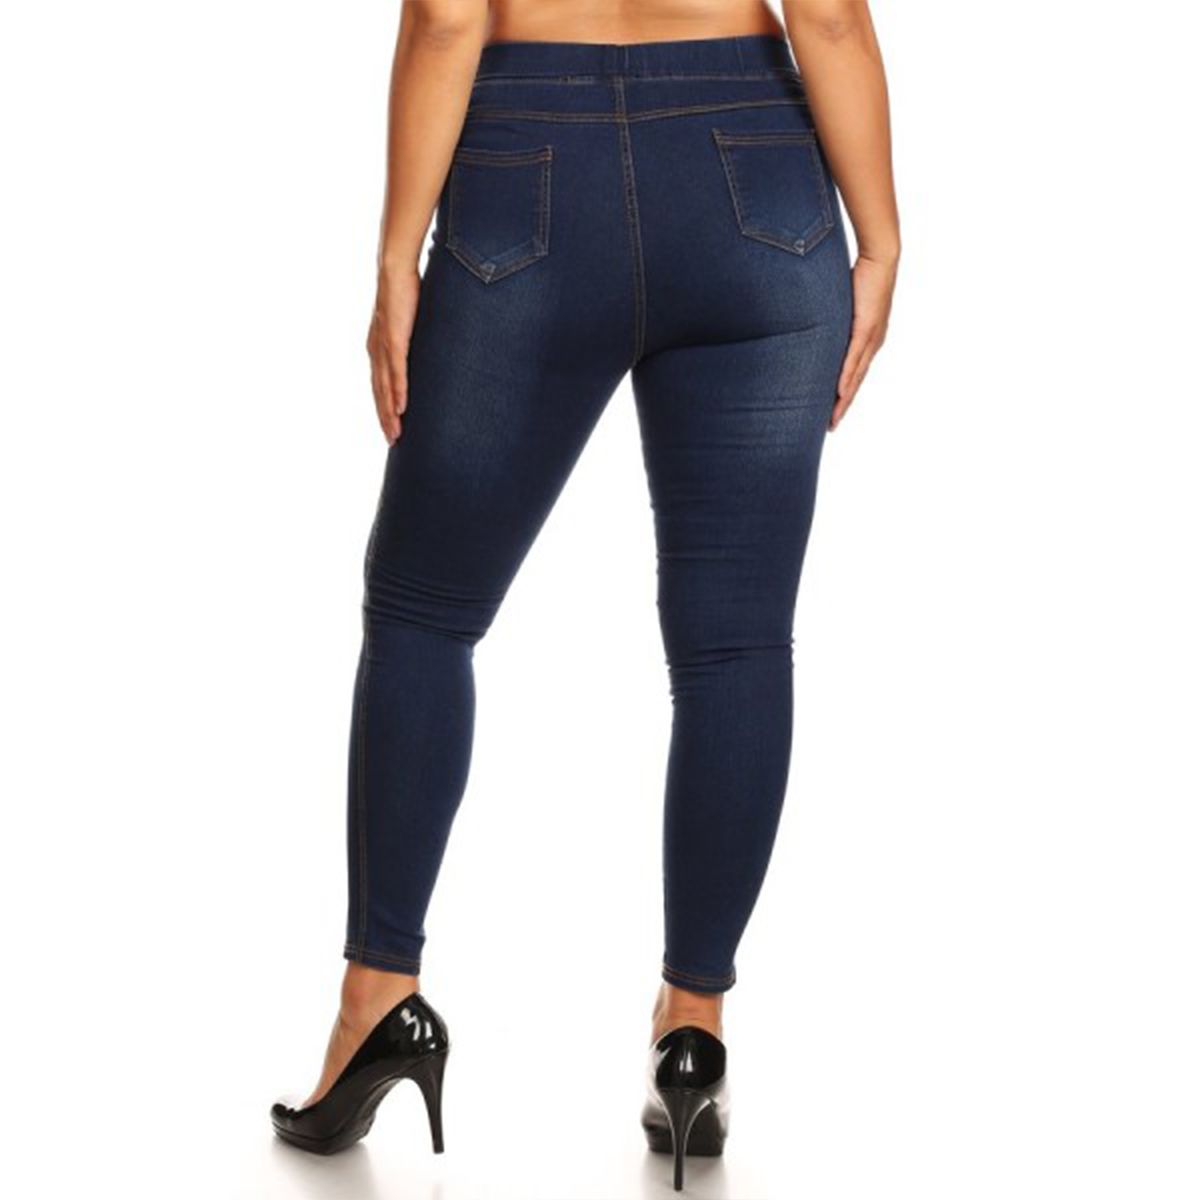 LAVRA Women's True Plus Size Jegging High Waist Jeans Full Length Denim Leggings with Pockets - image 3 of 5